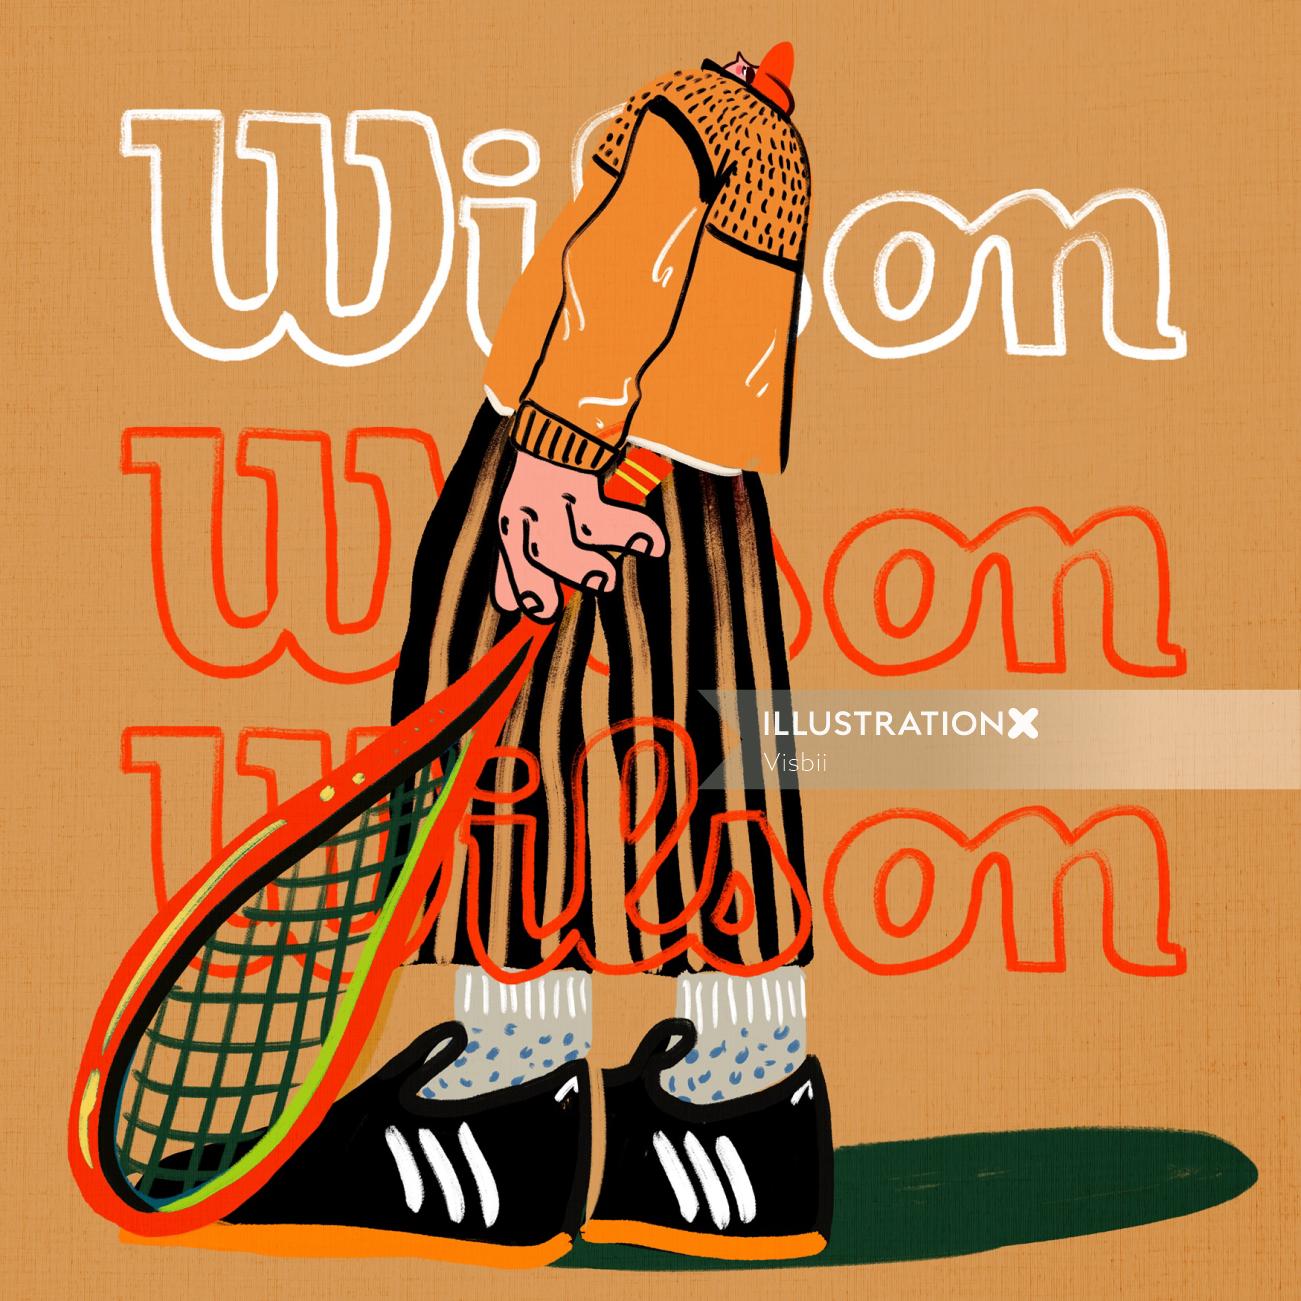 Advertising illustration of Wilson soft tennis ball